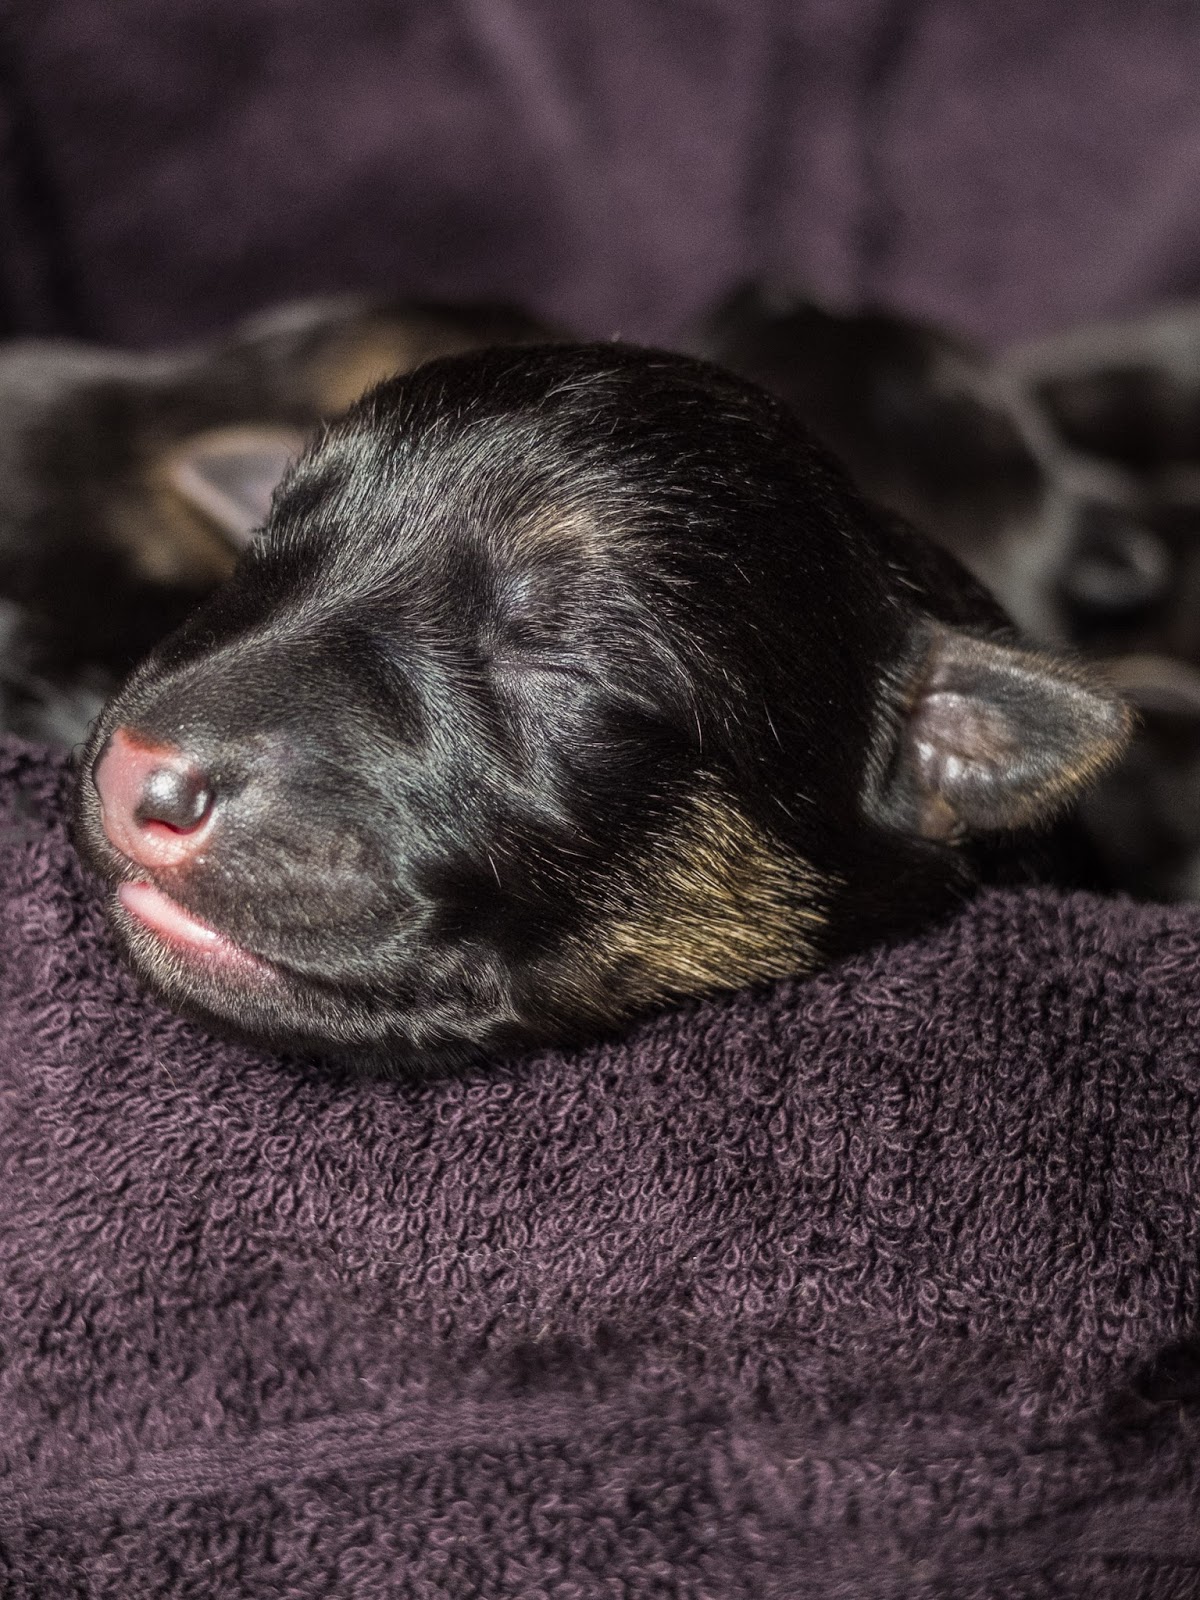 Newborn German Shepherd puppy face.